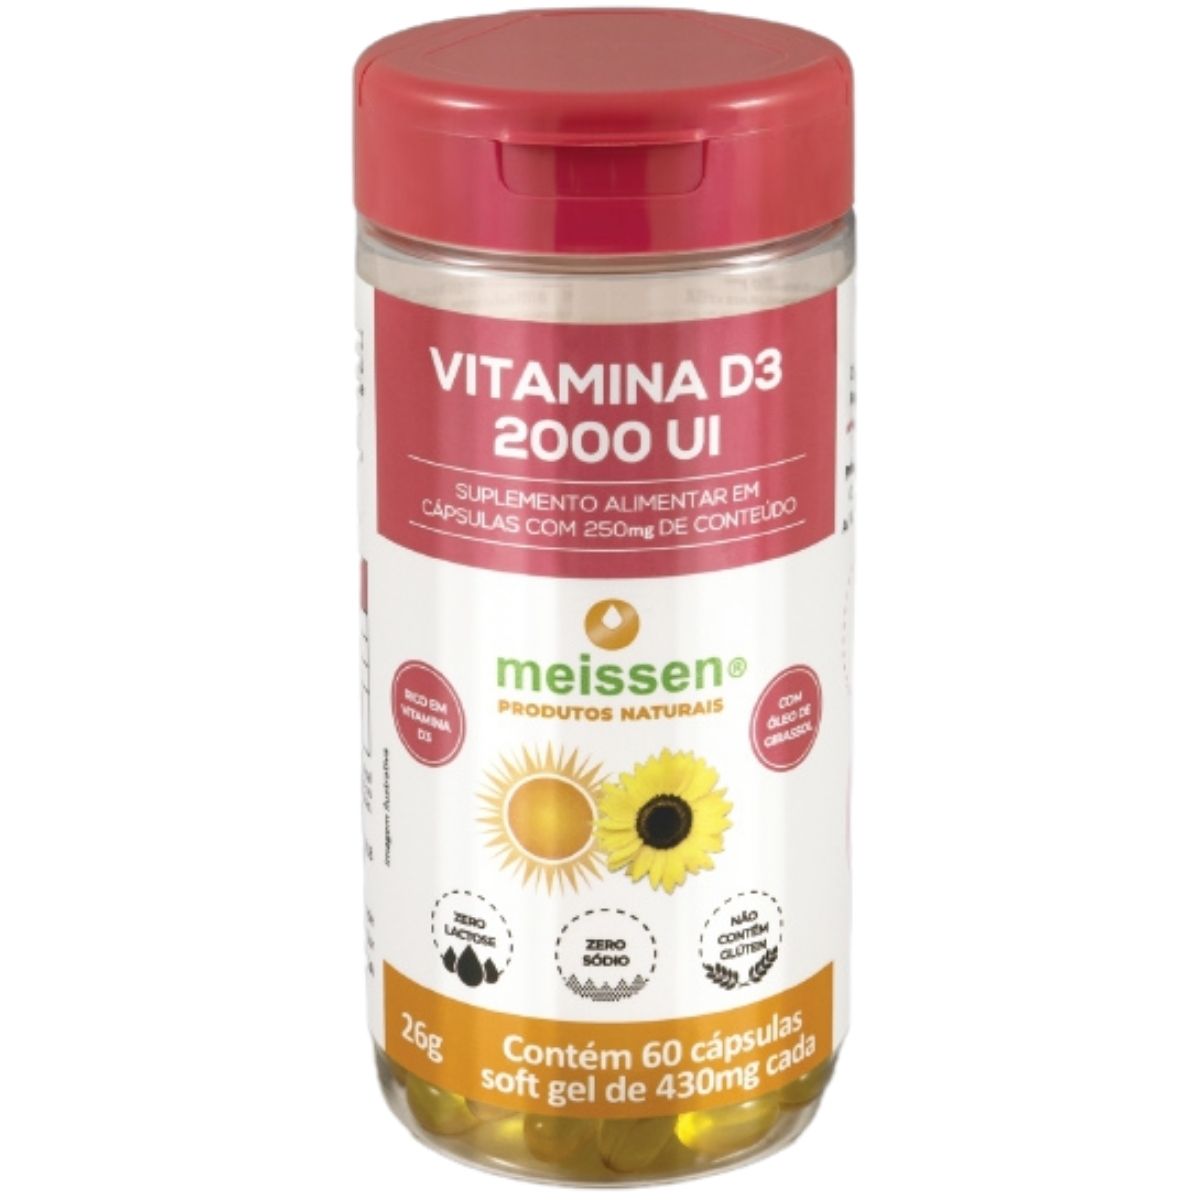 Vitamina D3 Colecalciferol 2000 UI 60 Cápsulas 430mg - Meissen